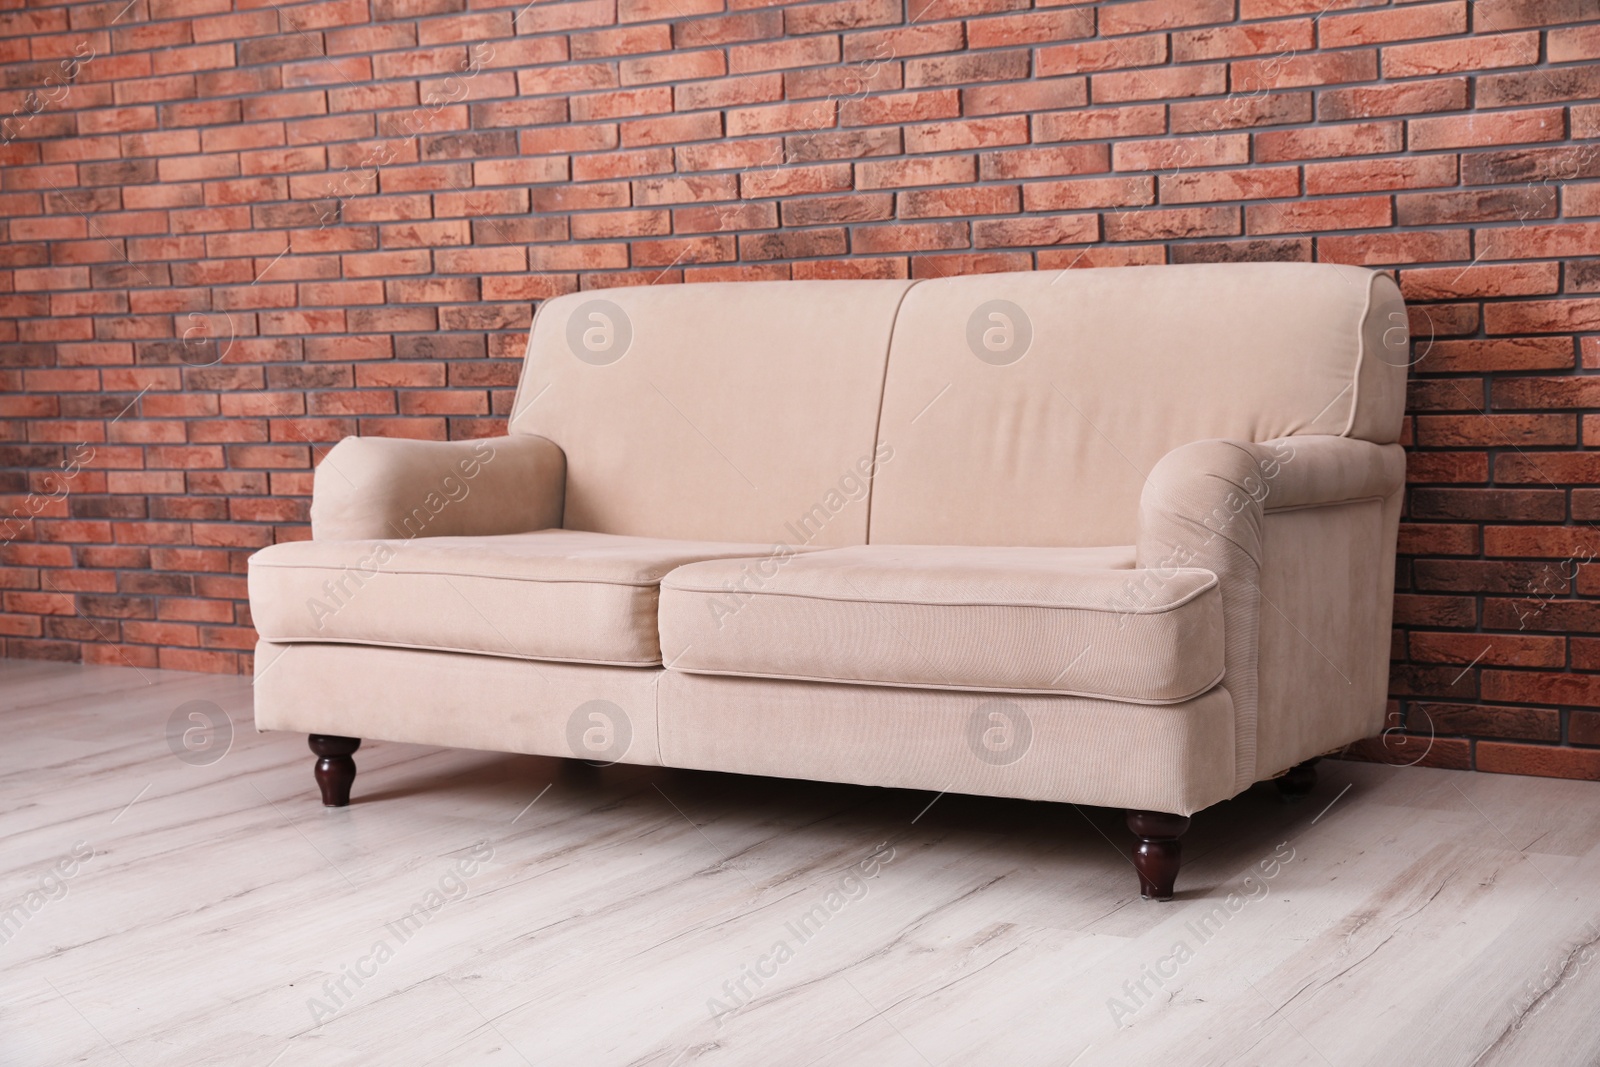 Photo of Room interior with comfortable sofa near brick wall